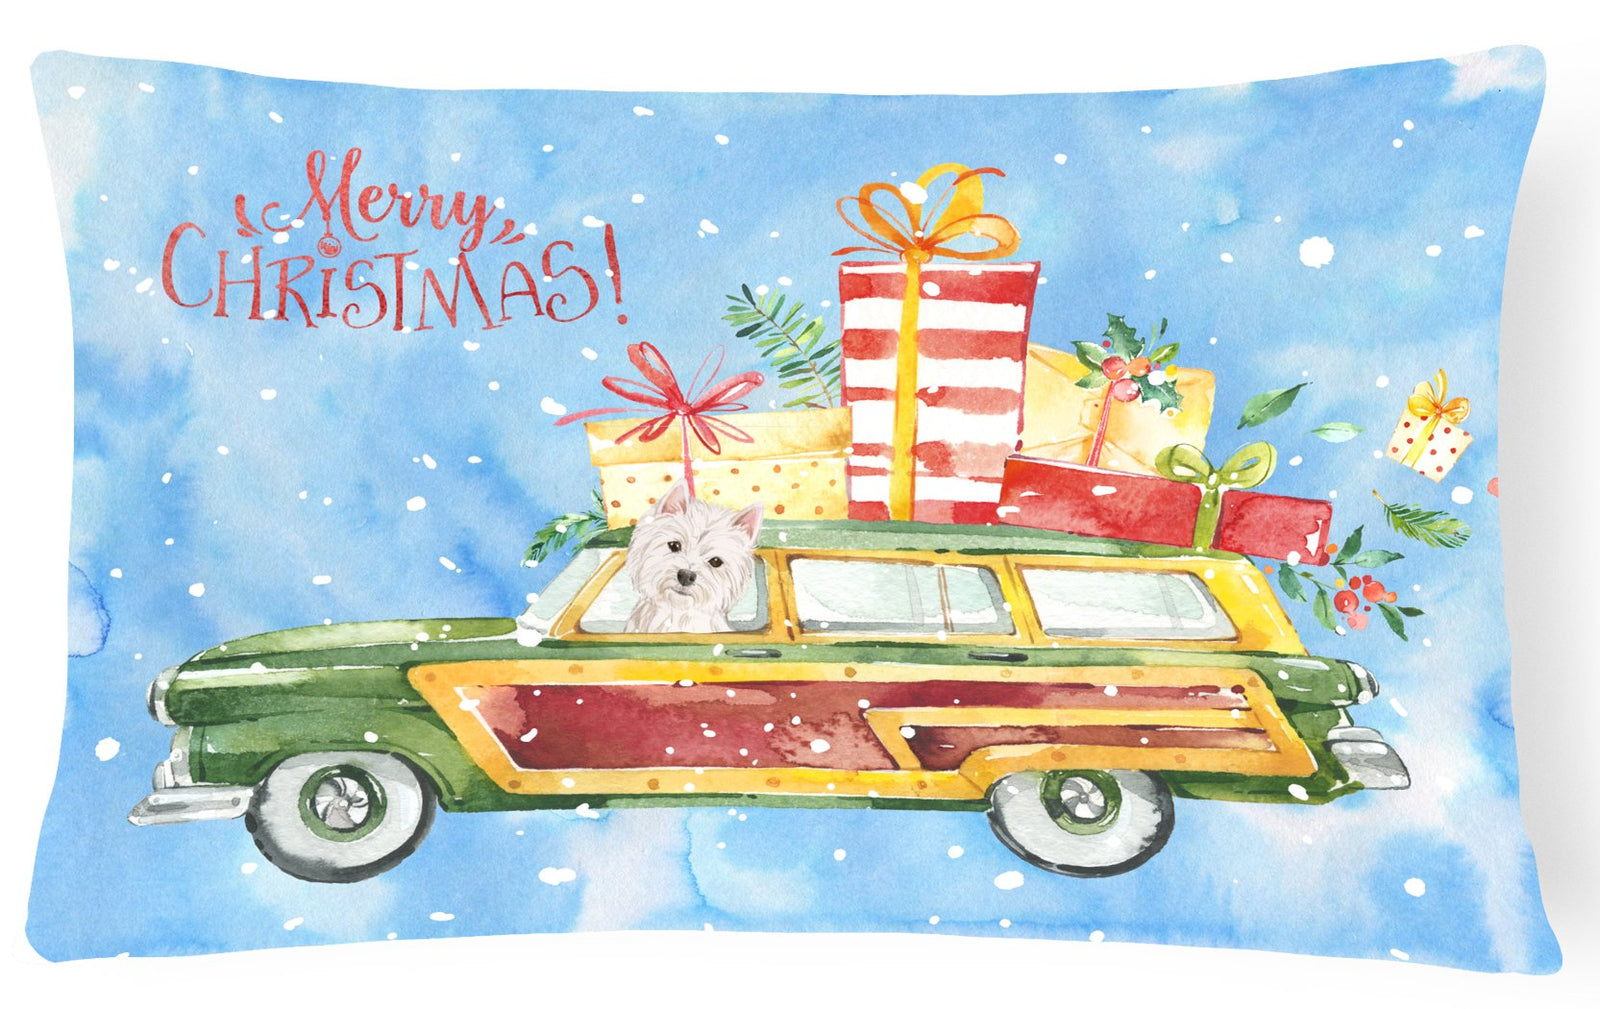 Merry Christmas Westie Canvas Fabric Decorative Pillow CK2441PW1216 by Caroline's Treasures